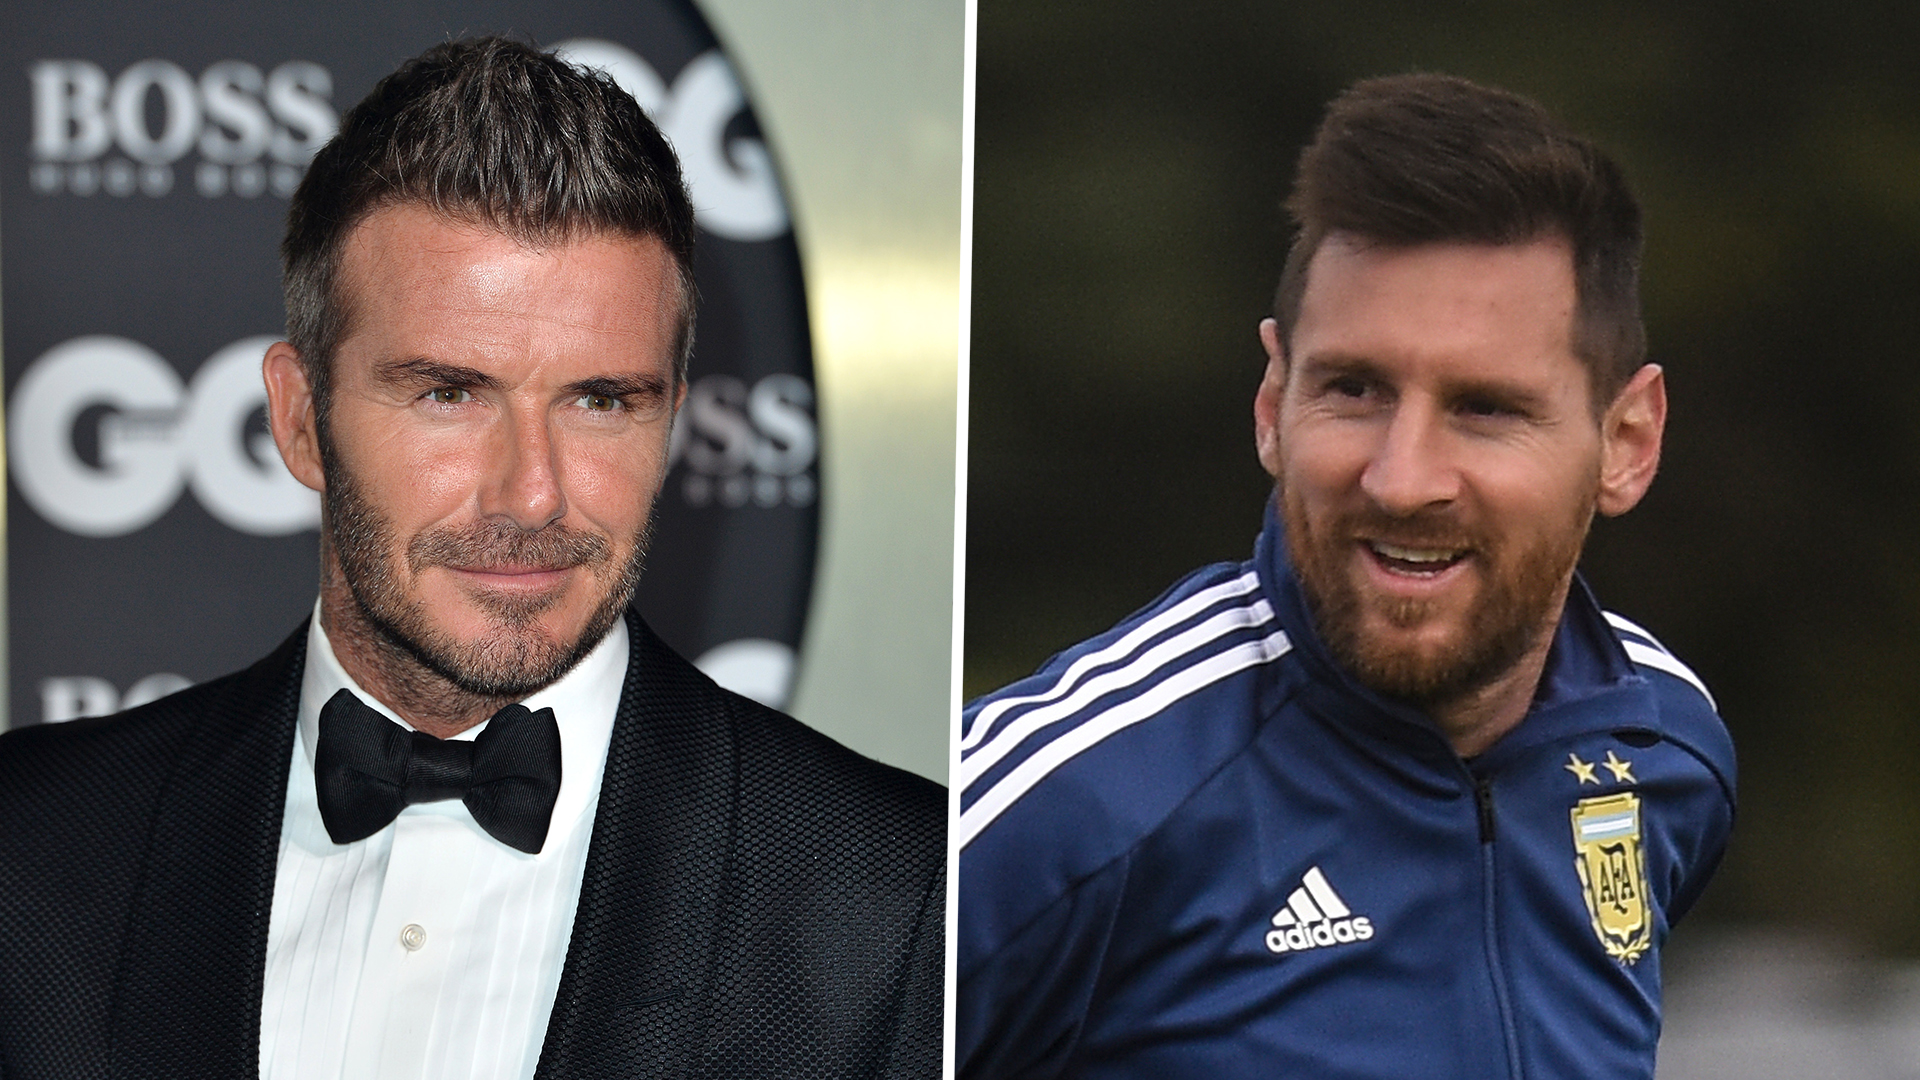 Lingard looked to model game on Messi & Beckham when making Man Utd breakthrough